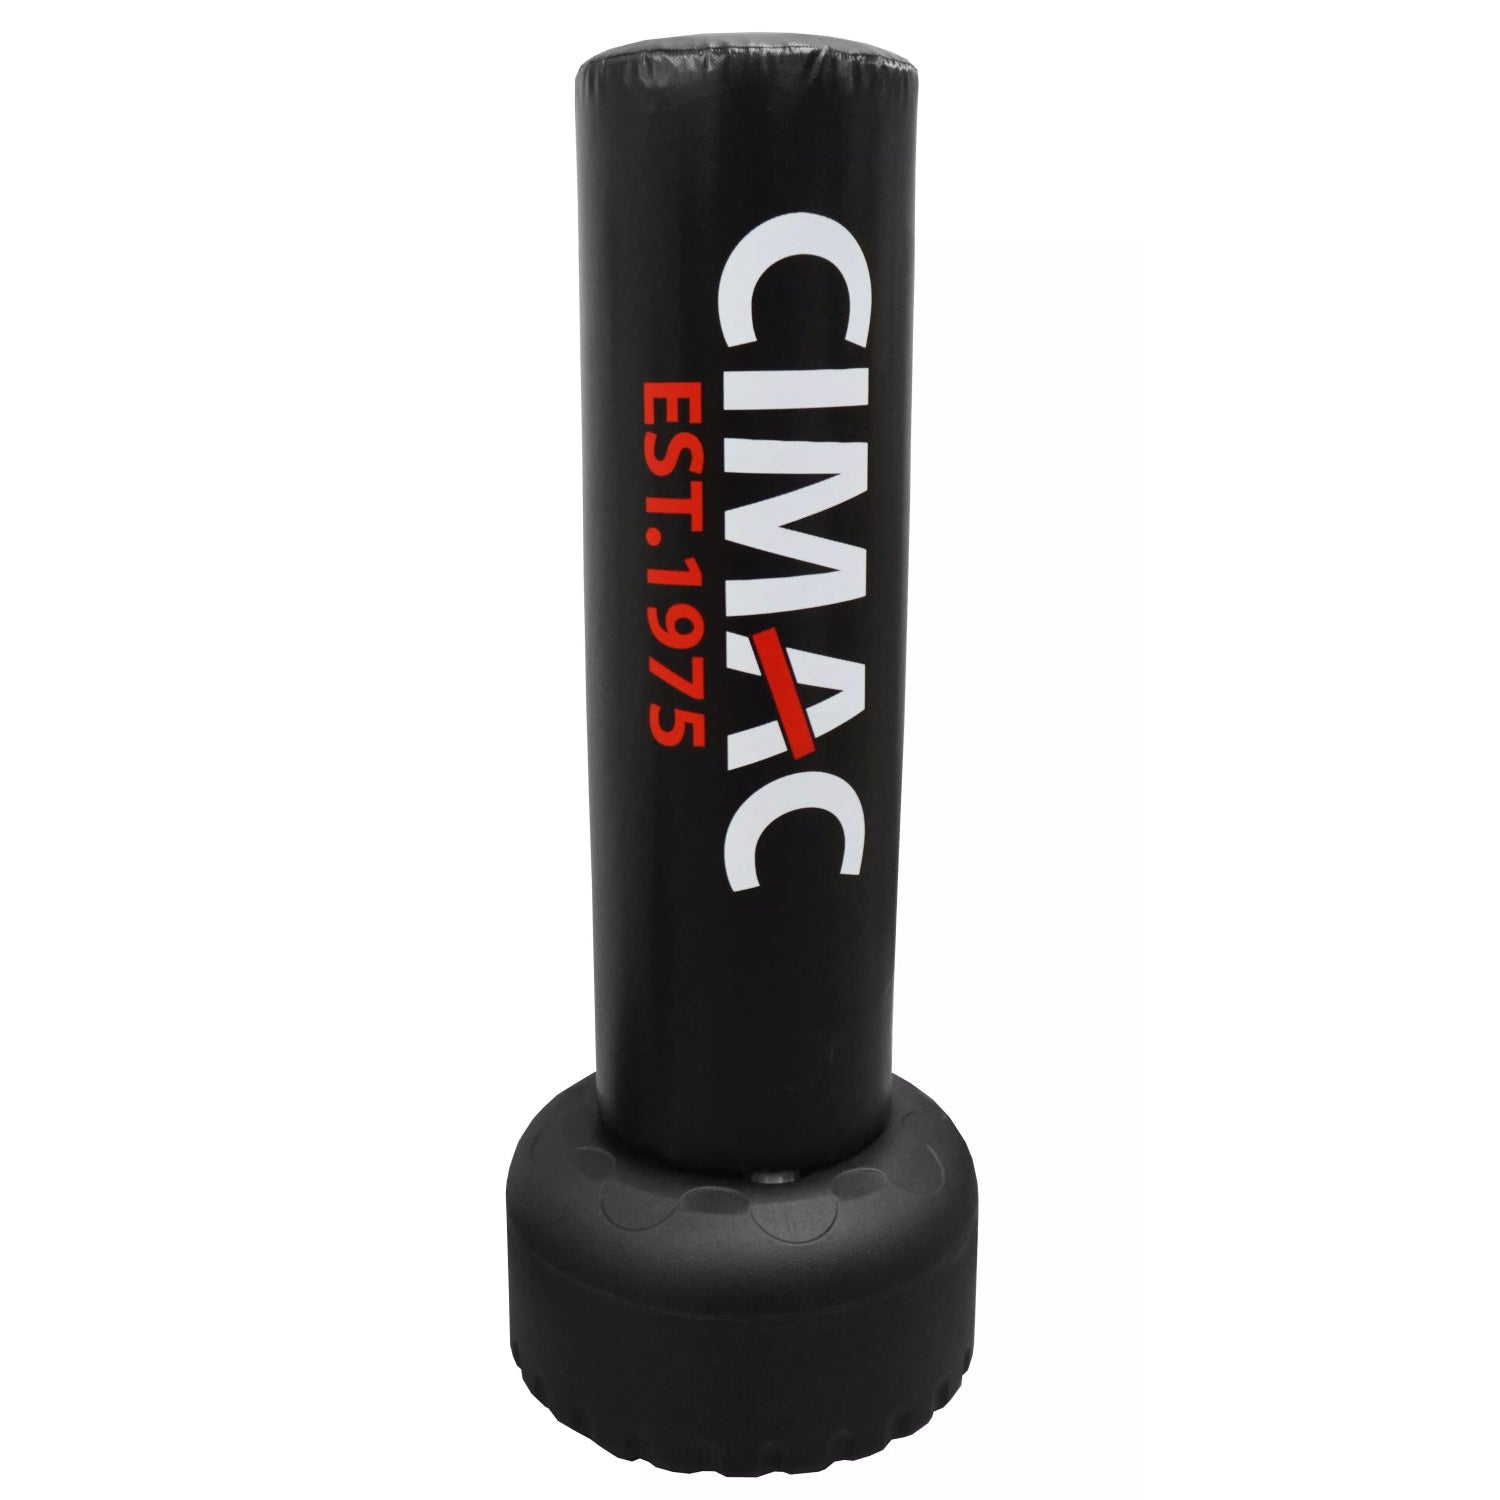 Cimac Freestanding Boxing Punch Bag XXL Kickboxing